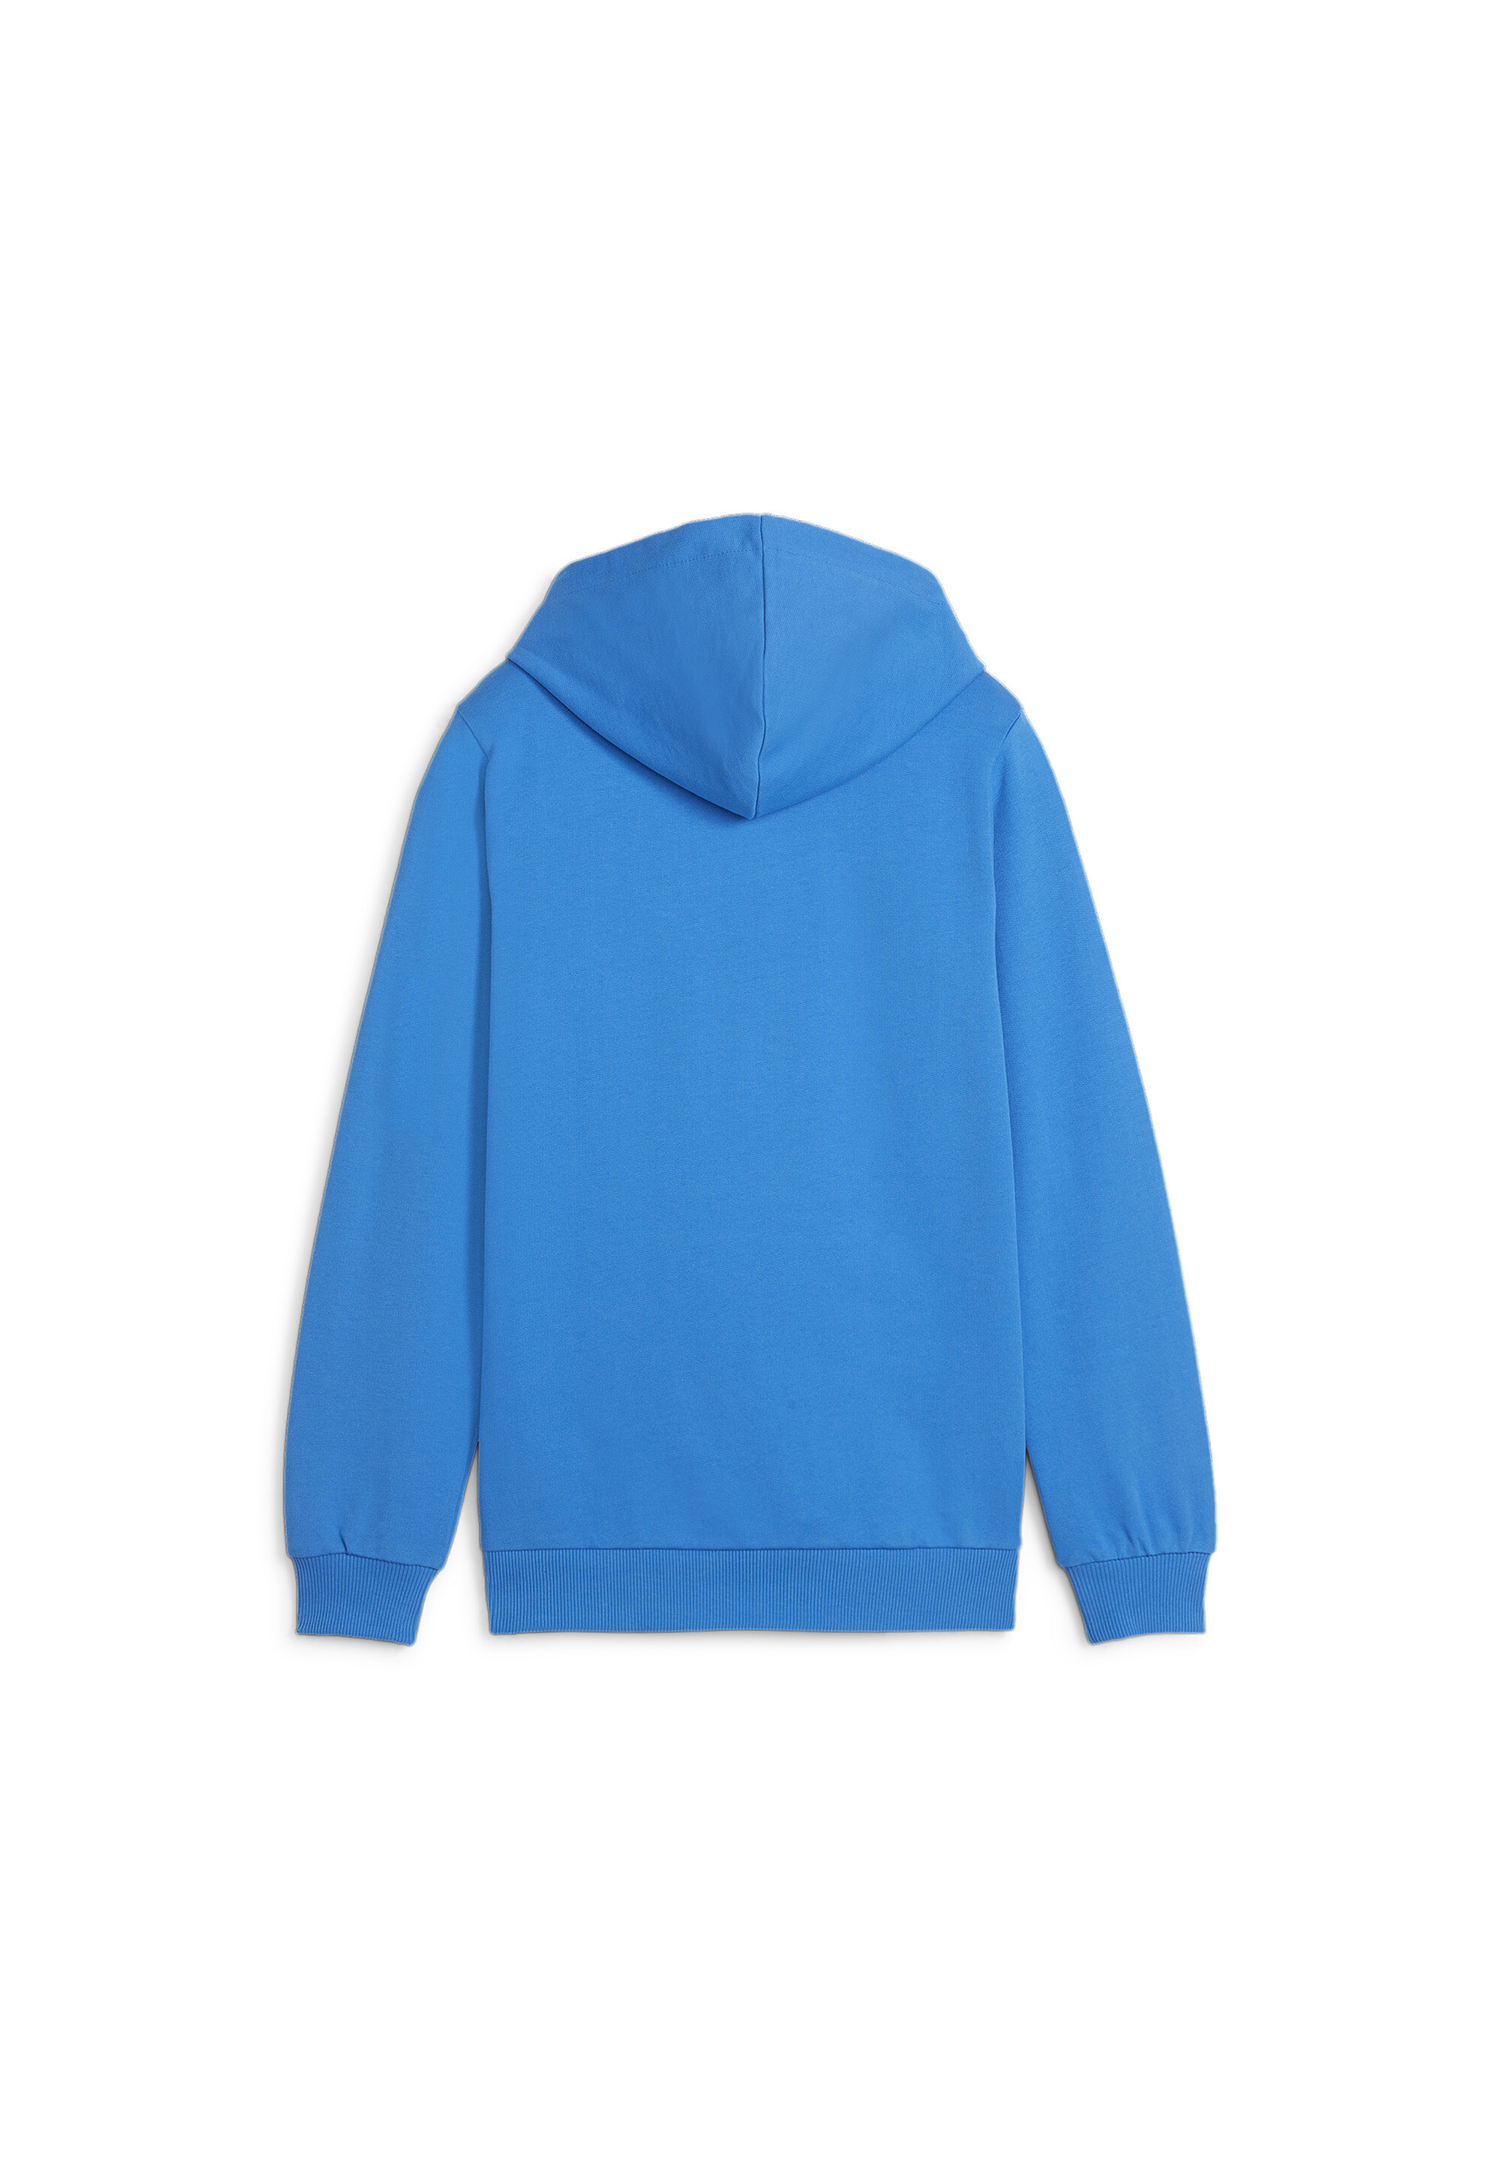 PUMA Kinder teamGOAL Casuals Hoody Sweatshirt Pullover 658619 blau